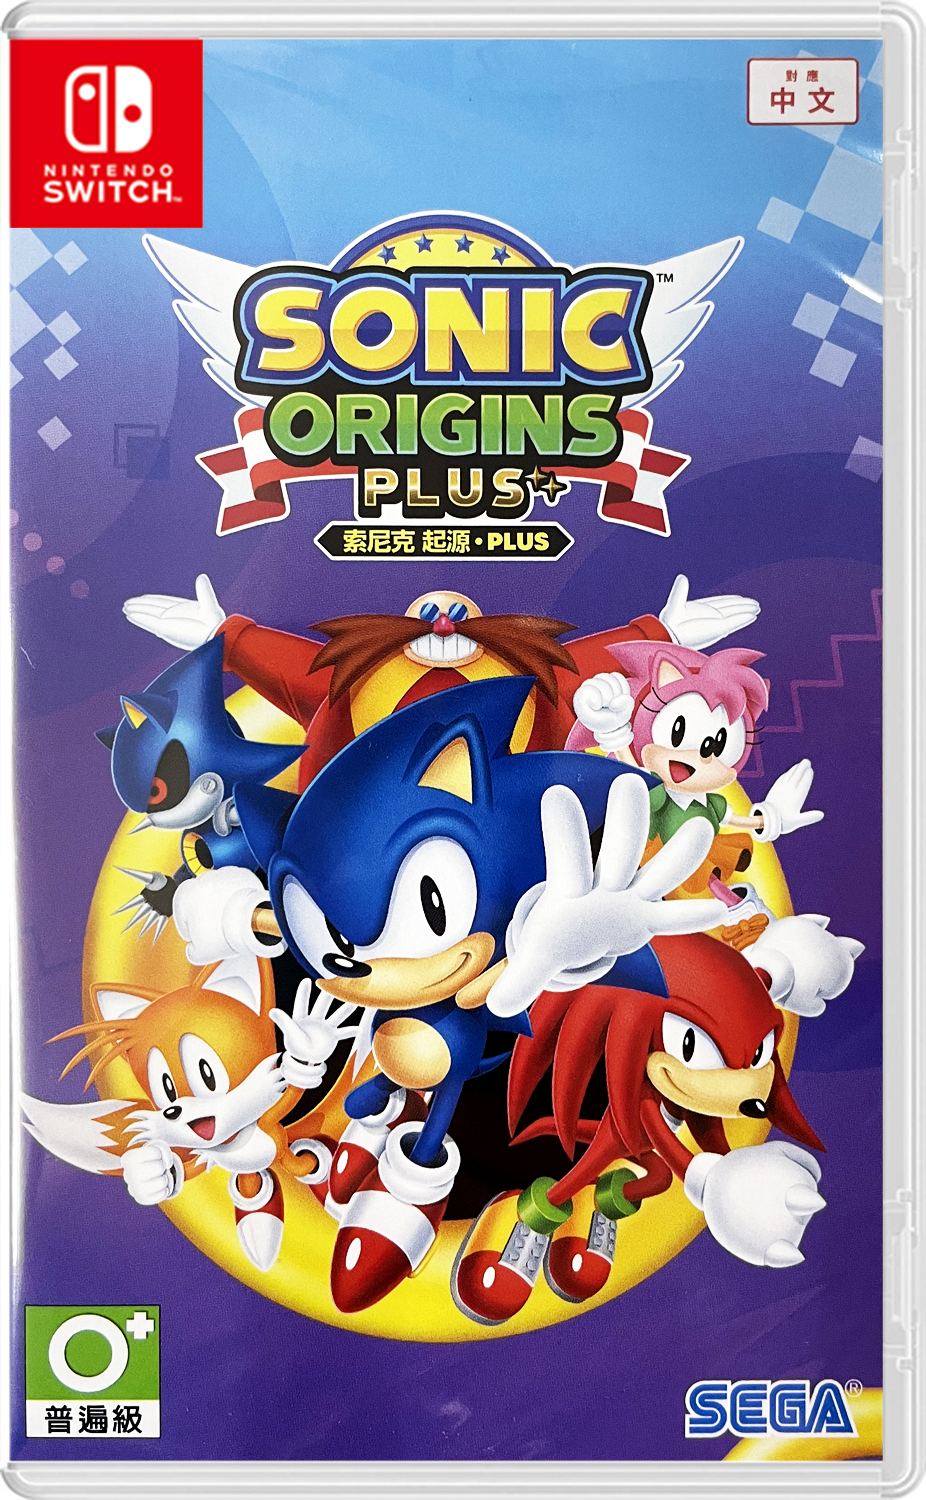 Sonic Origins Plus for Nintendo Switch - Nintendo Official Site